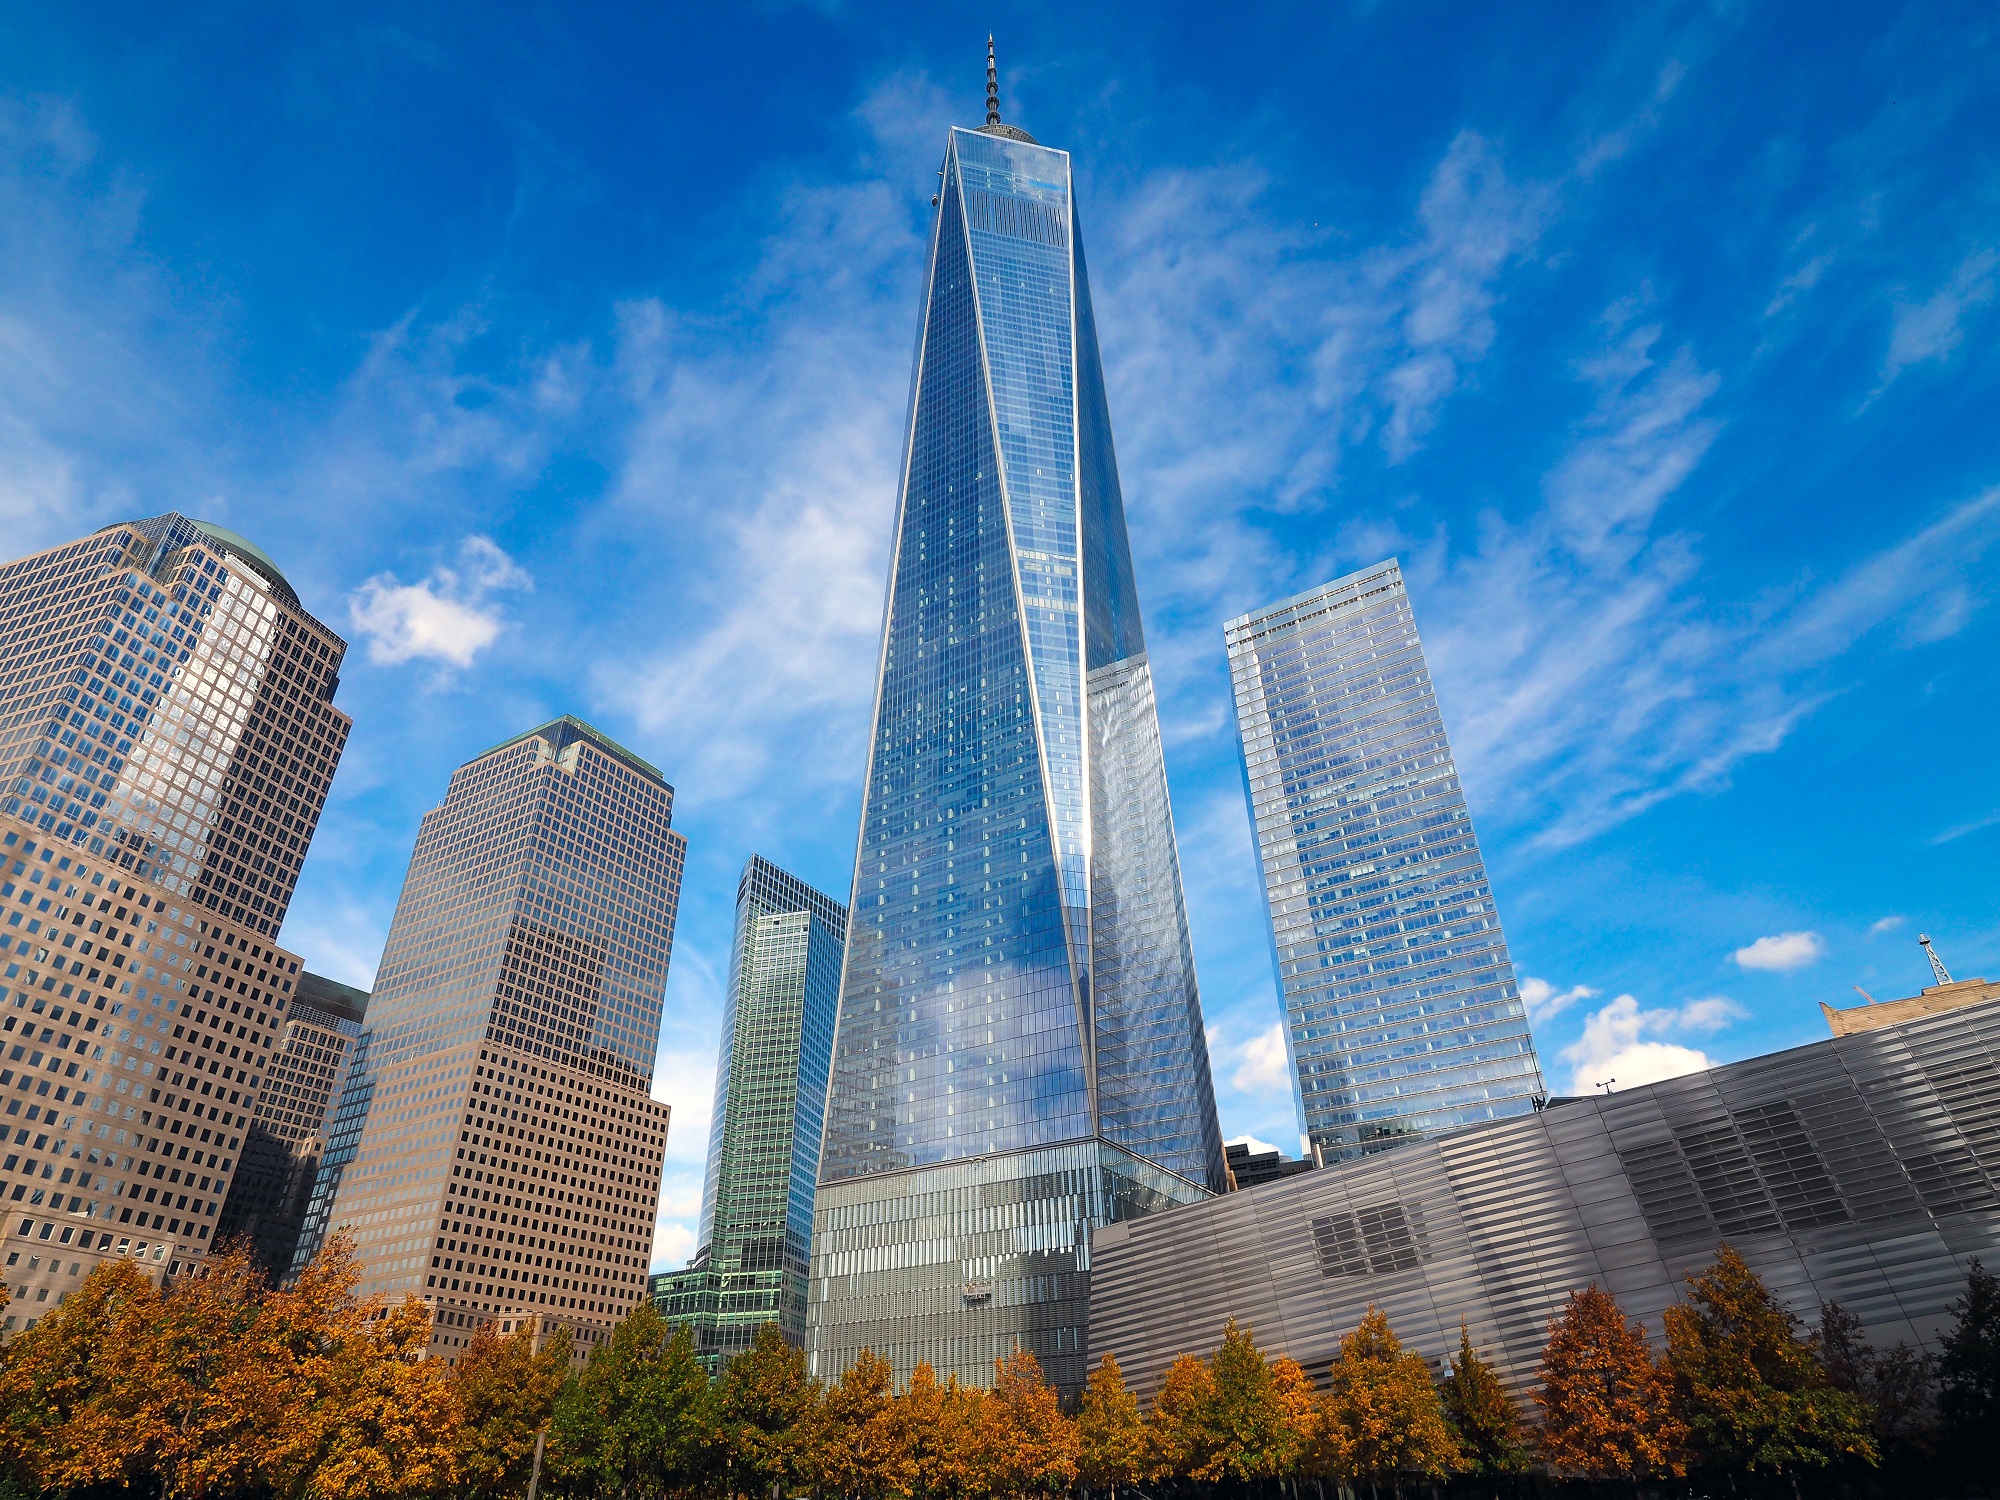 10. One World Trade Center